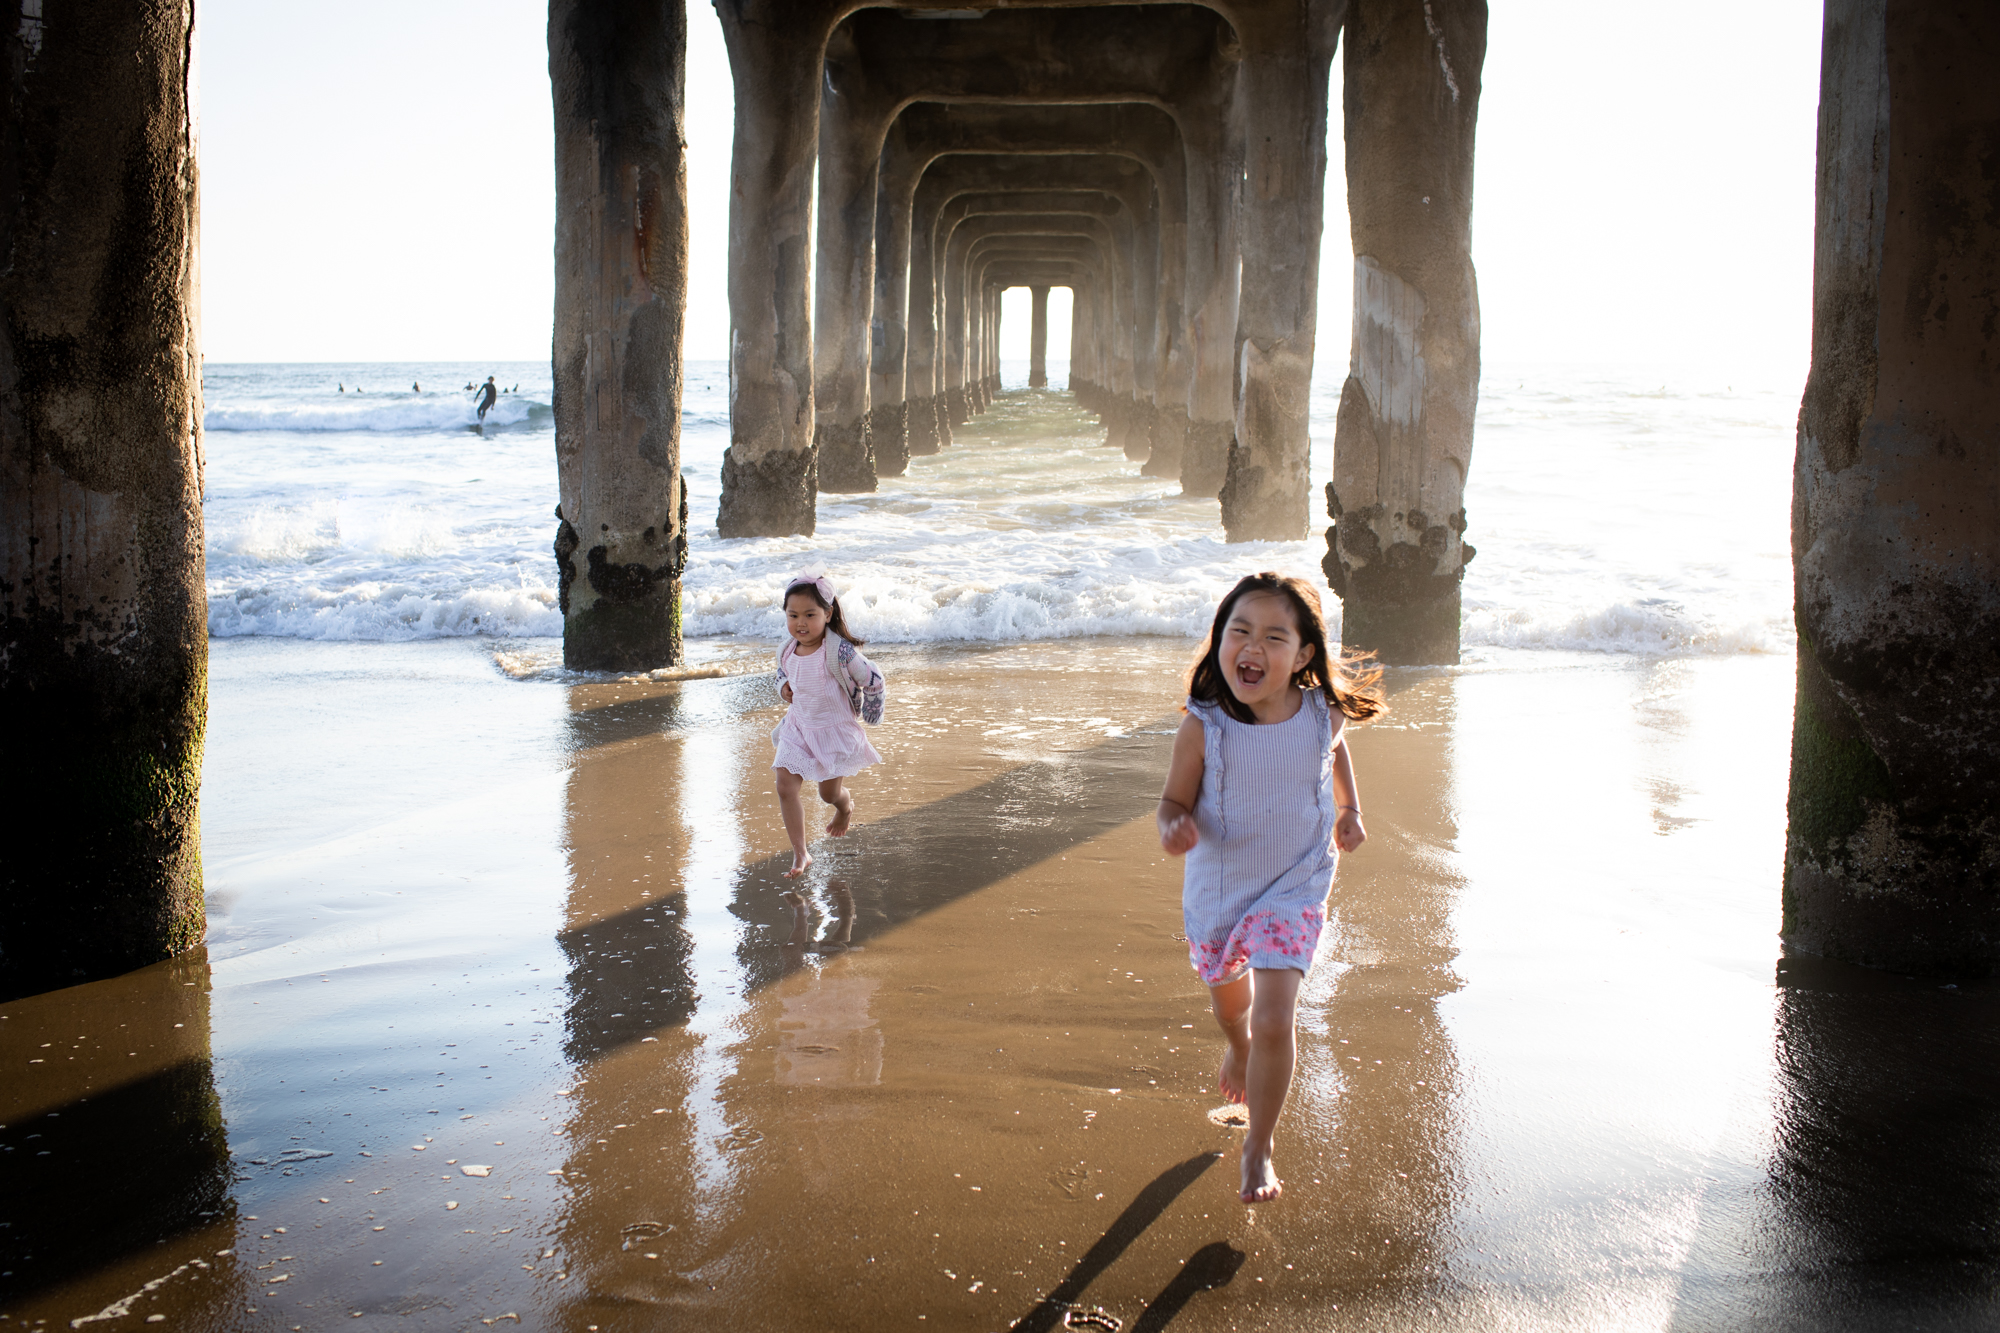 Los Angeles sisters having fun at the beach